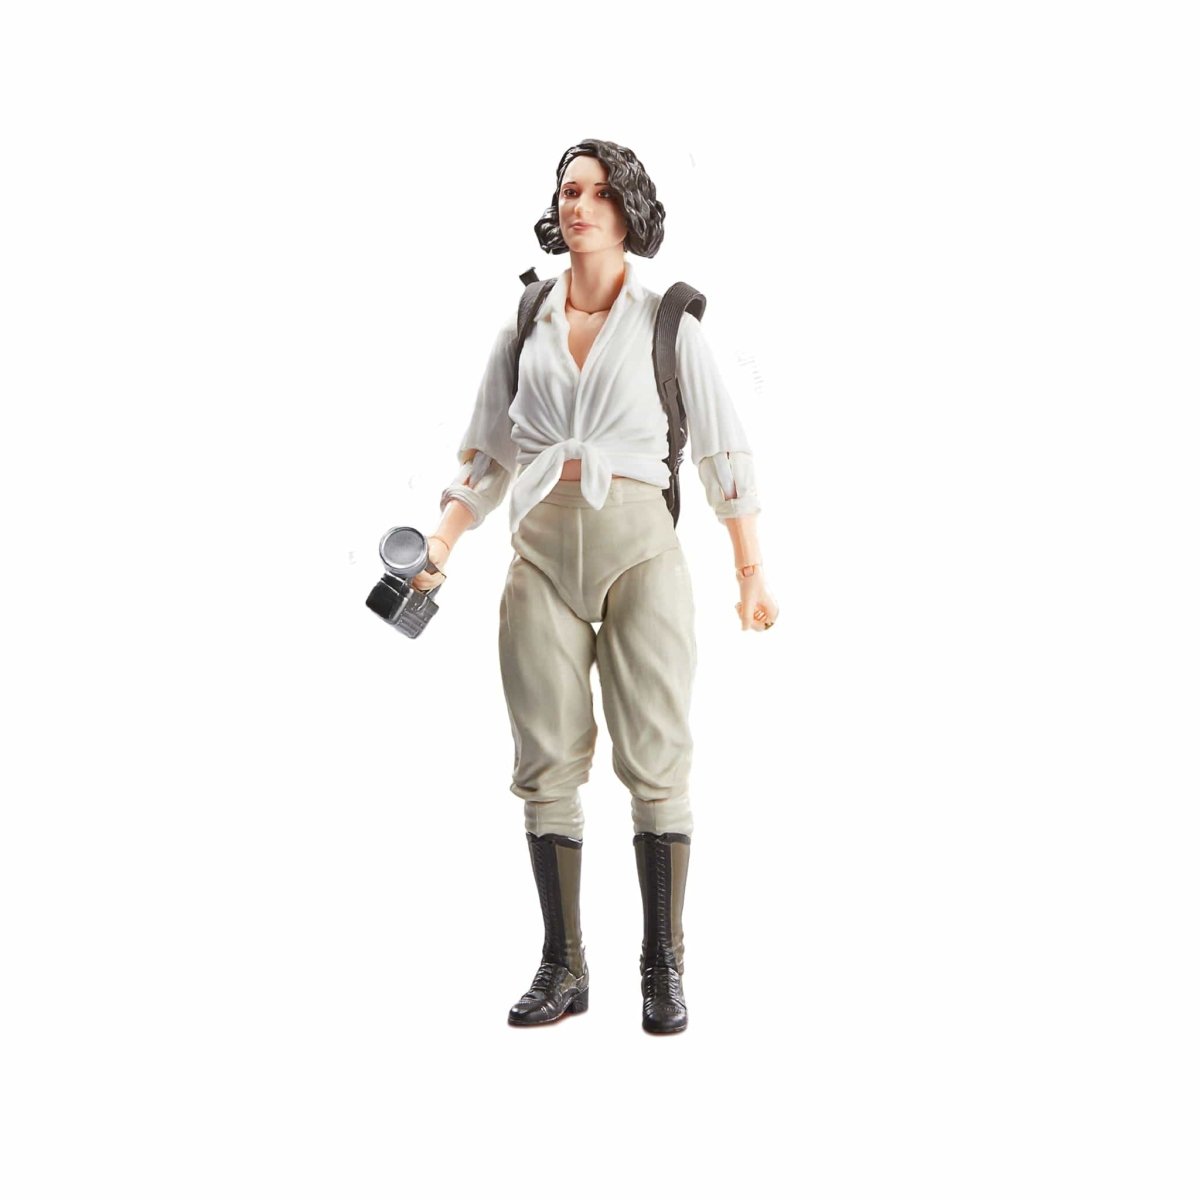 Helena Shaw - Indiana Jones Adventure Series - 6" Action Figure - Pop-O-Loco - Hasbro